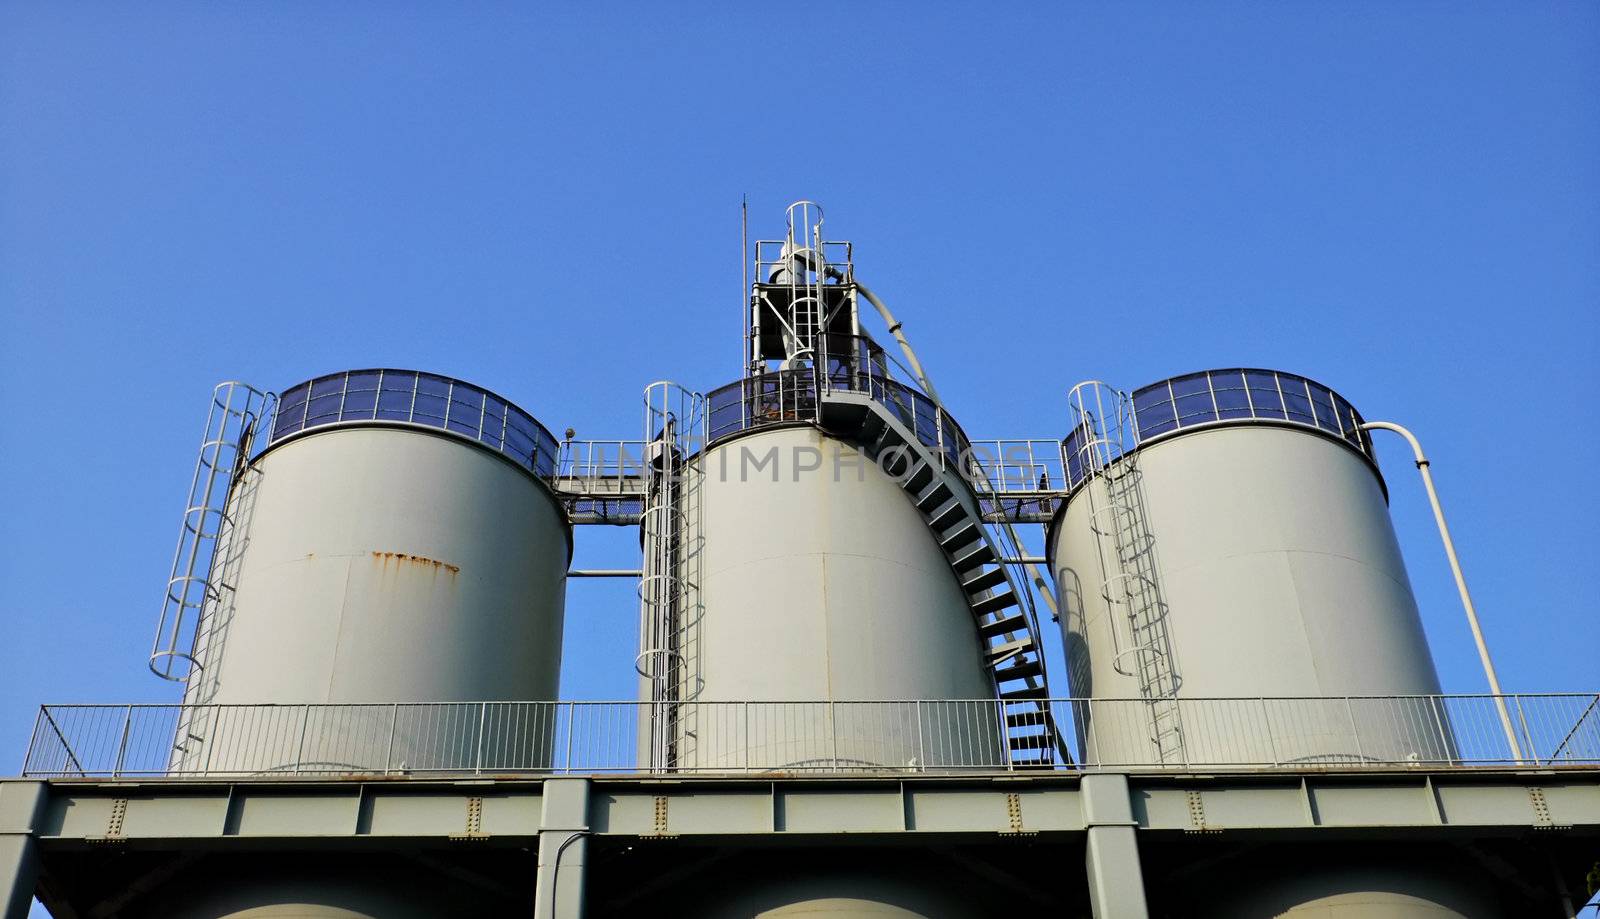 huge industrial reservoir barrels by yuriz